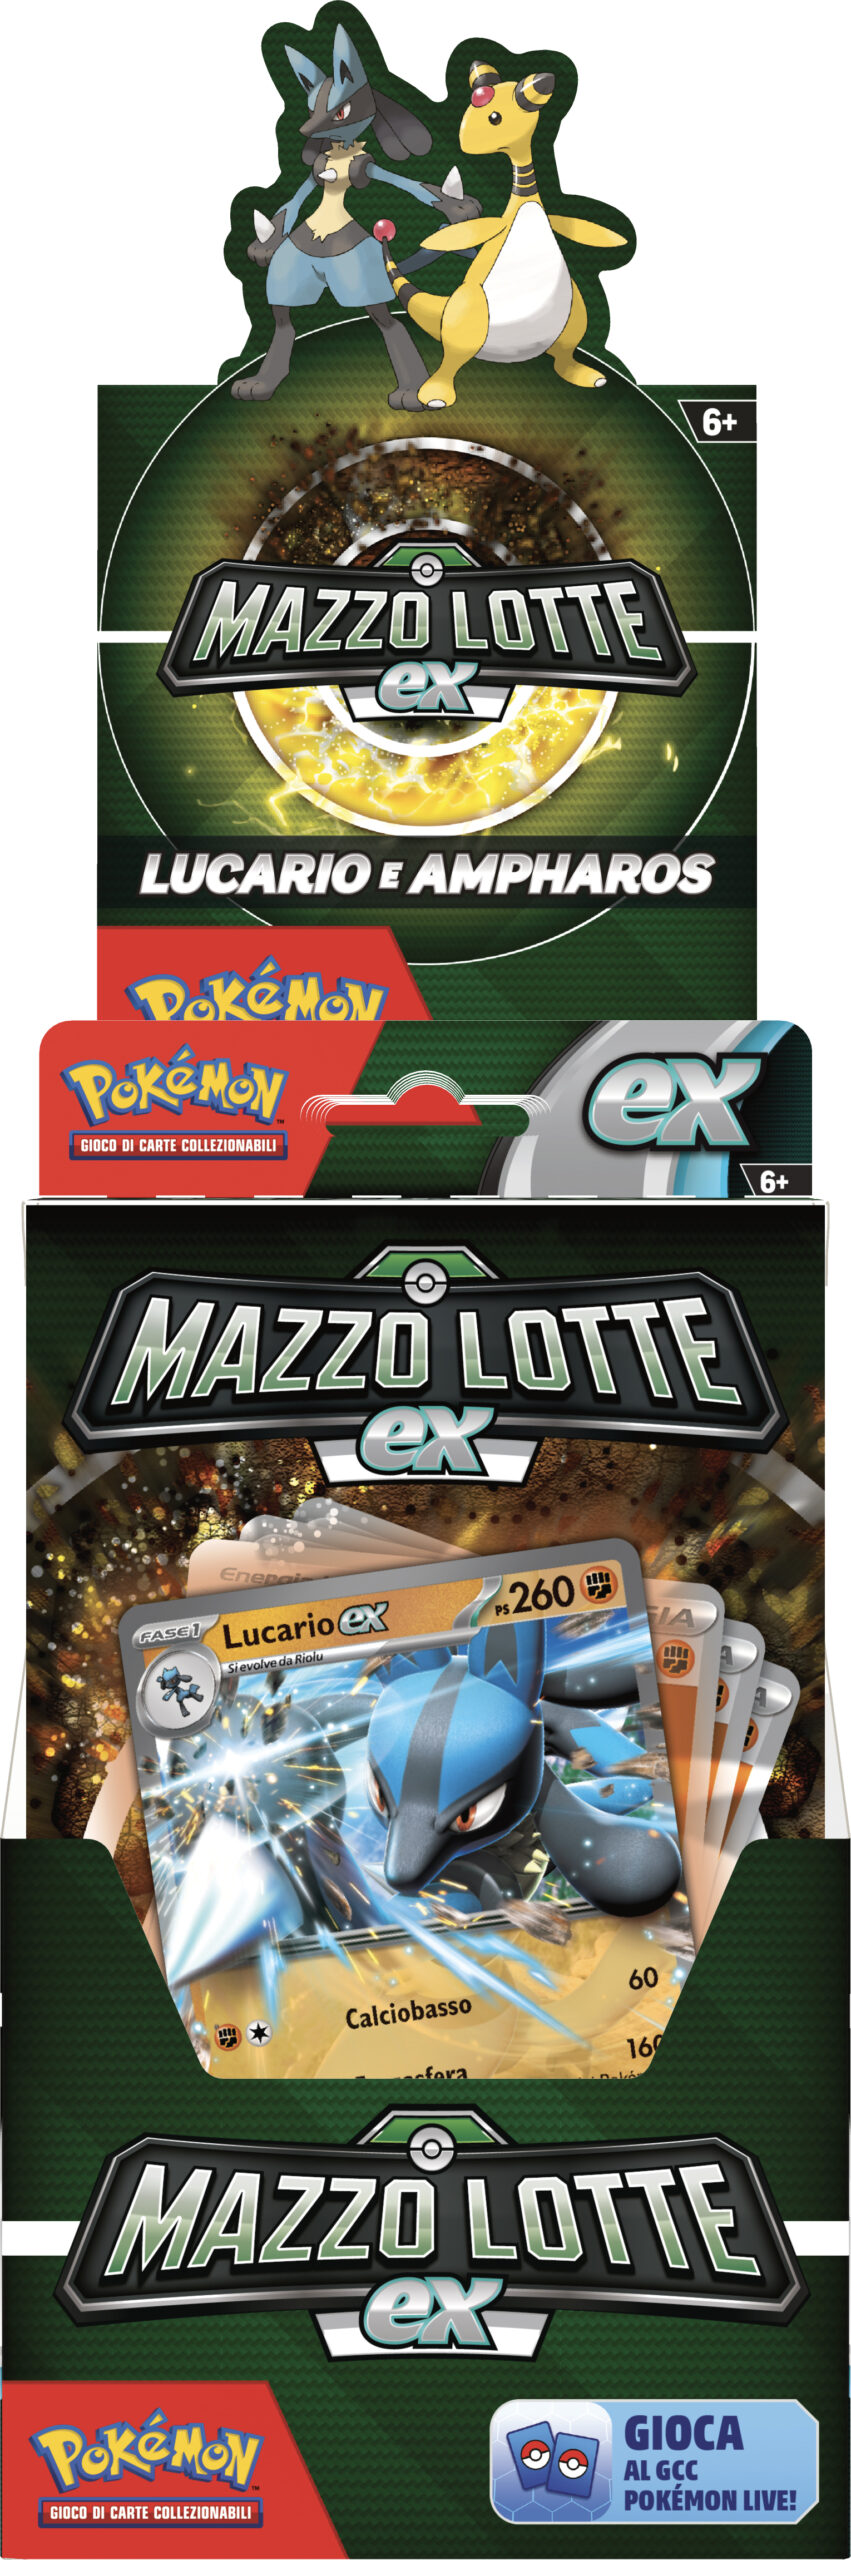 Pokemon mazzo lotte ex ampharos-ex / lucario-ex - POKEMON